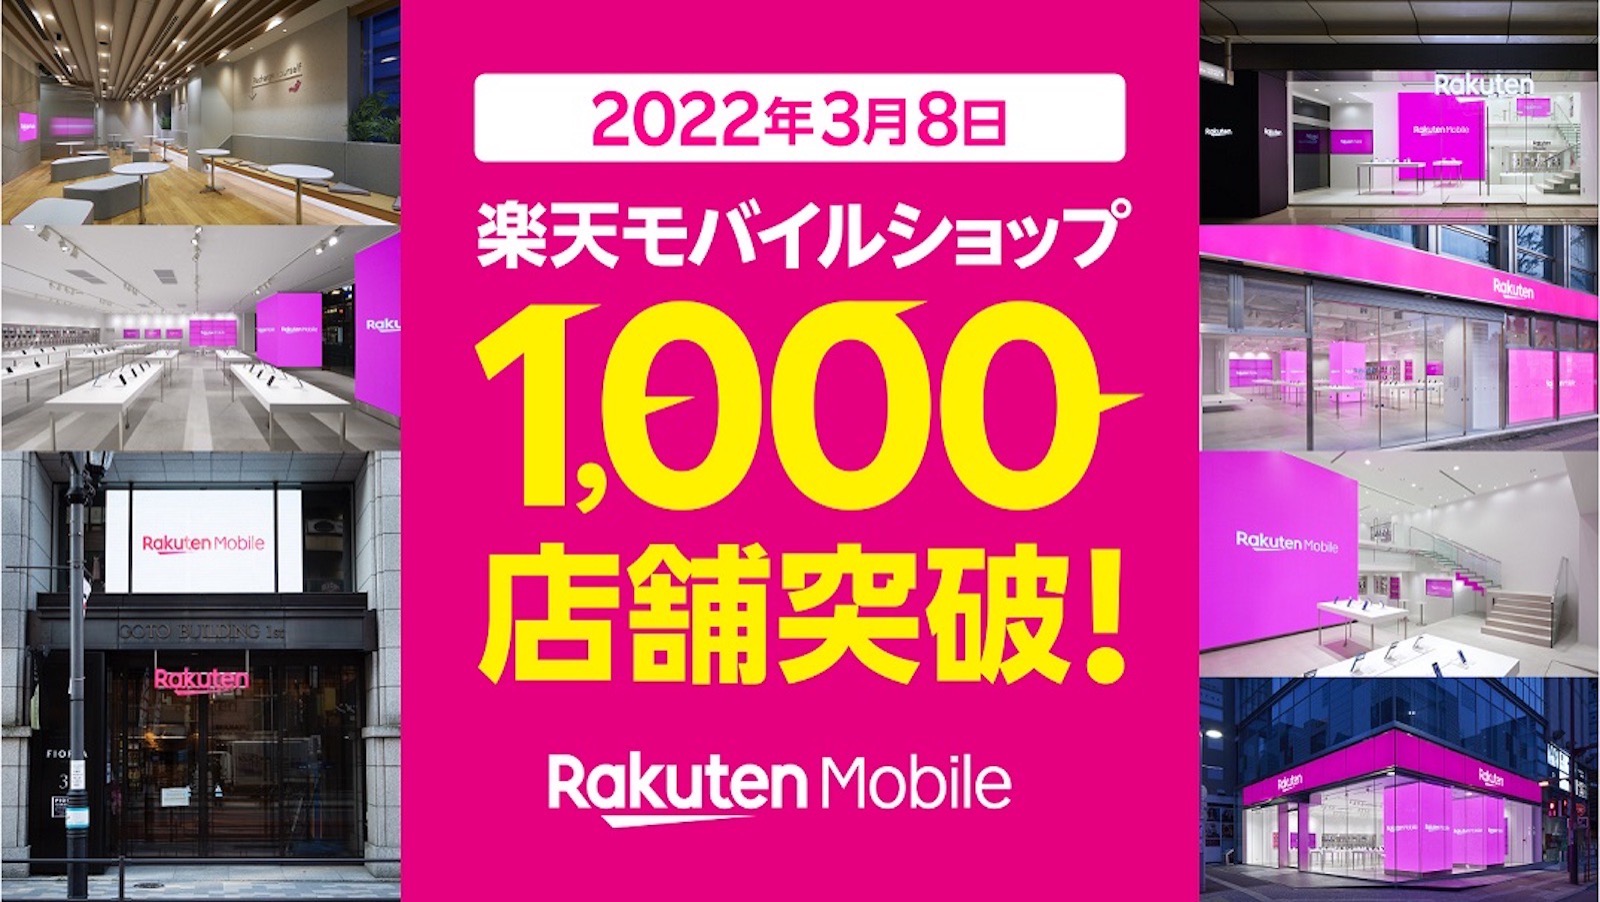 rakuten-mobile-store-campaign.jpg